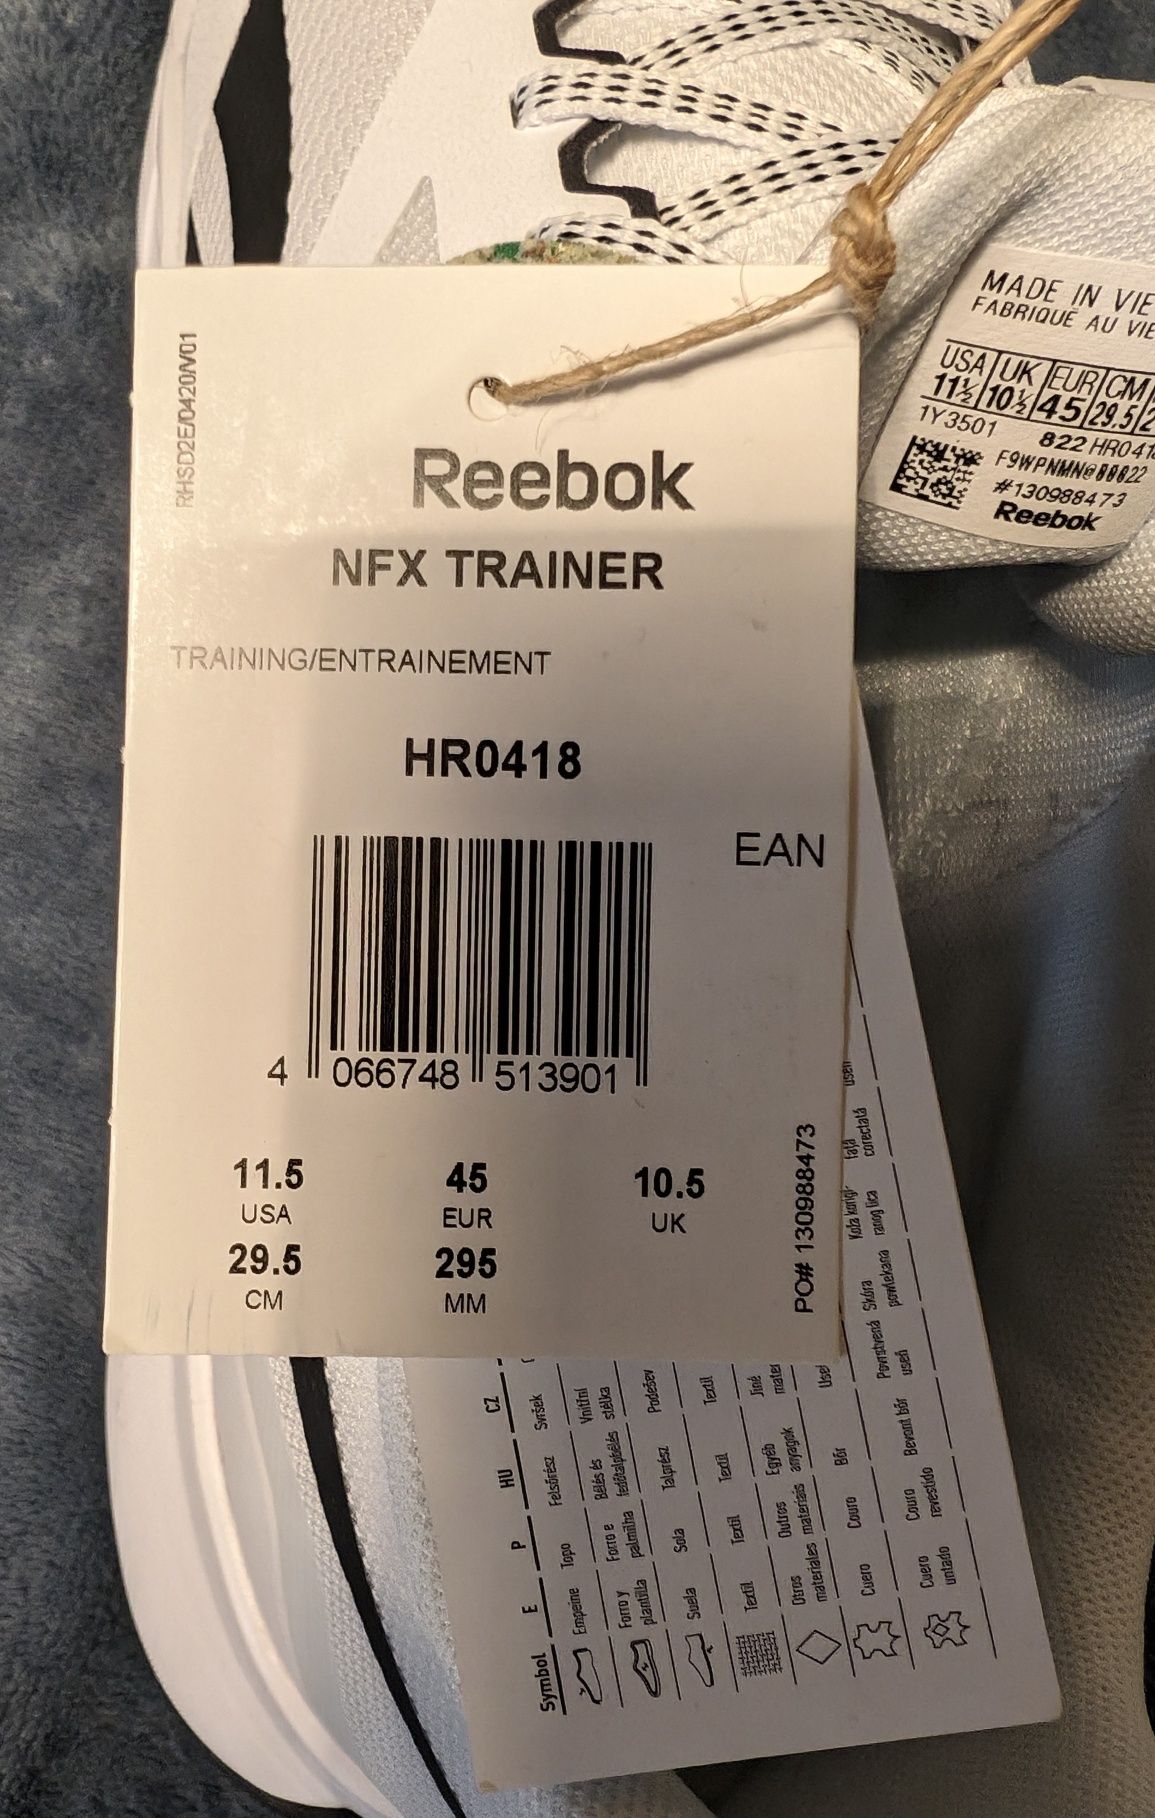 Reebok NFX Trainer